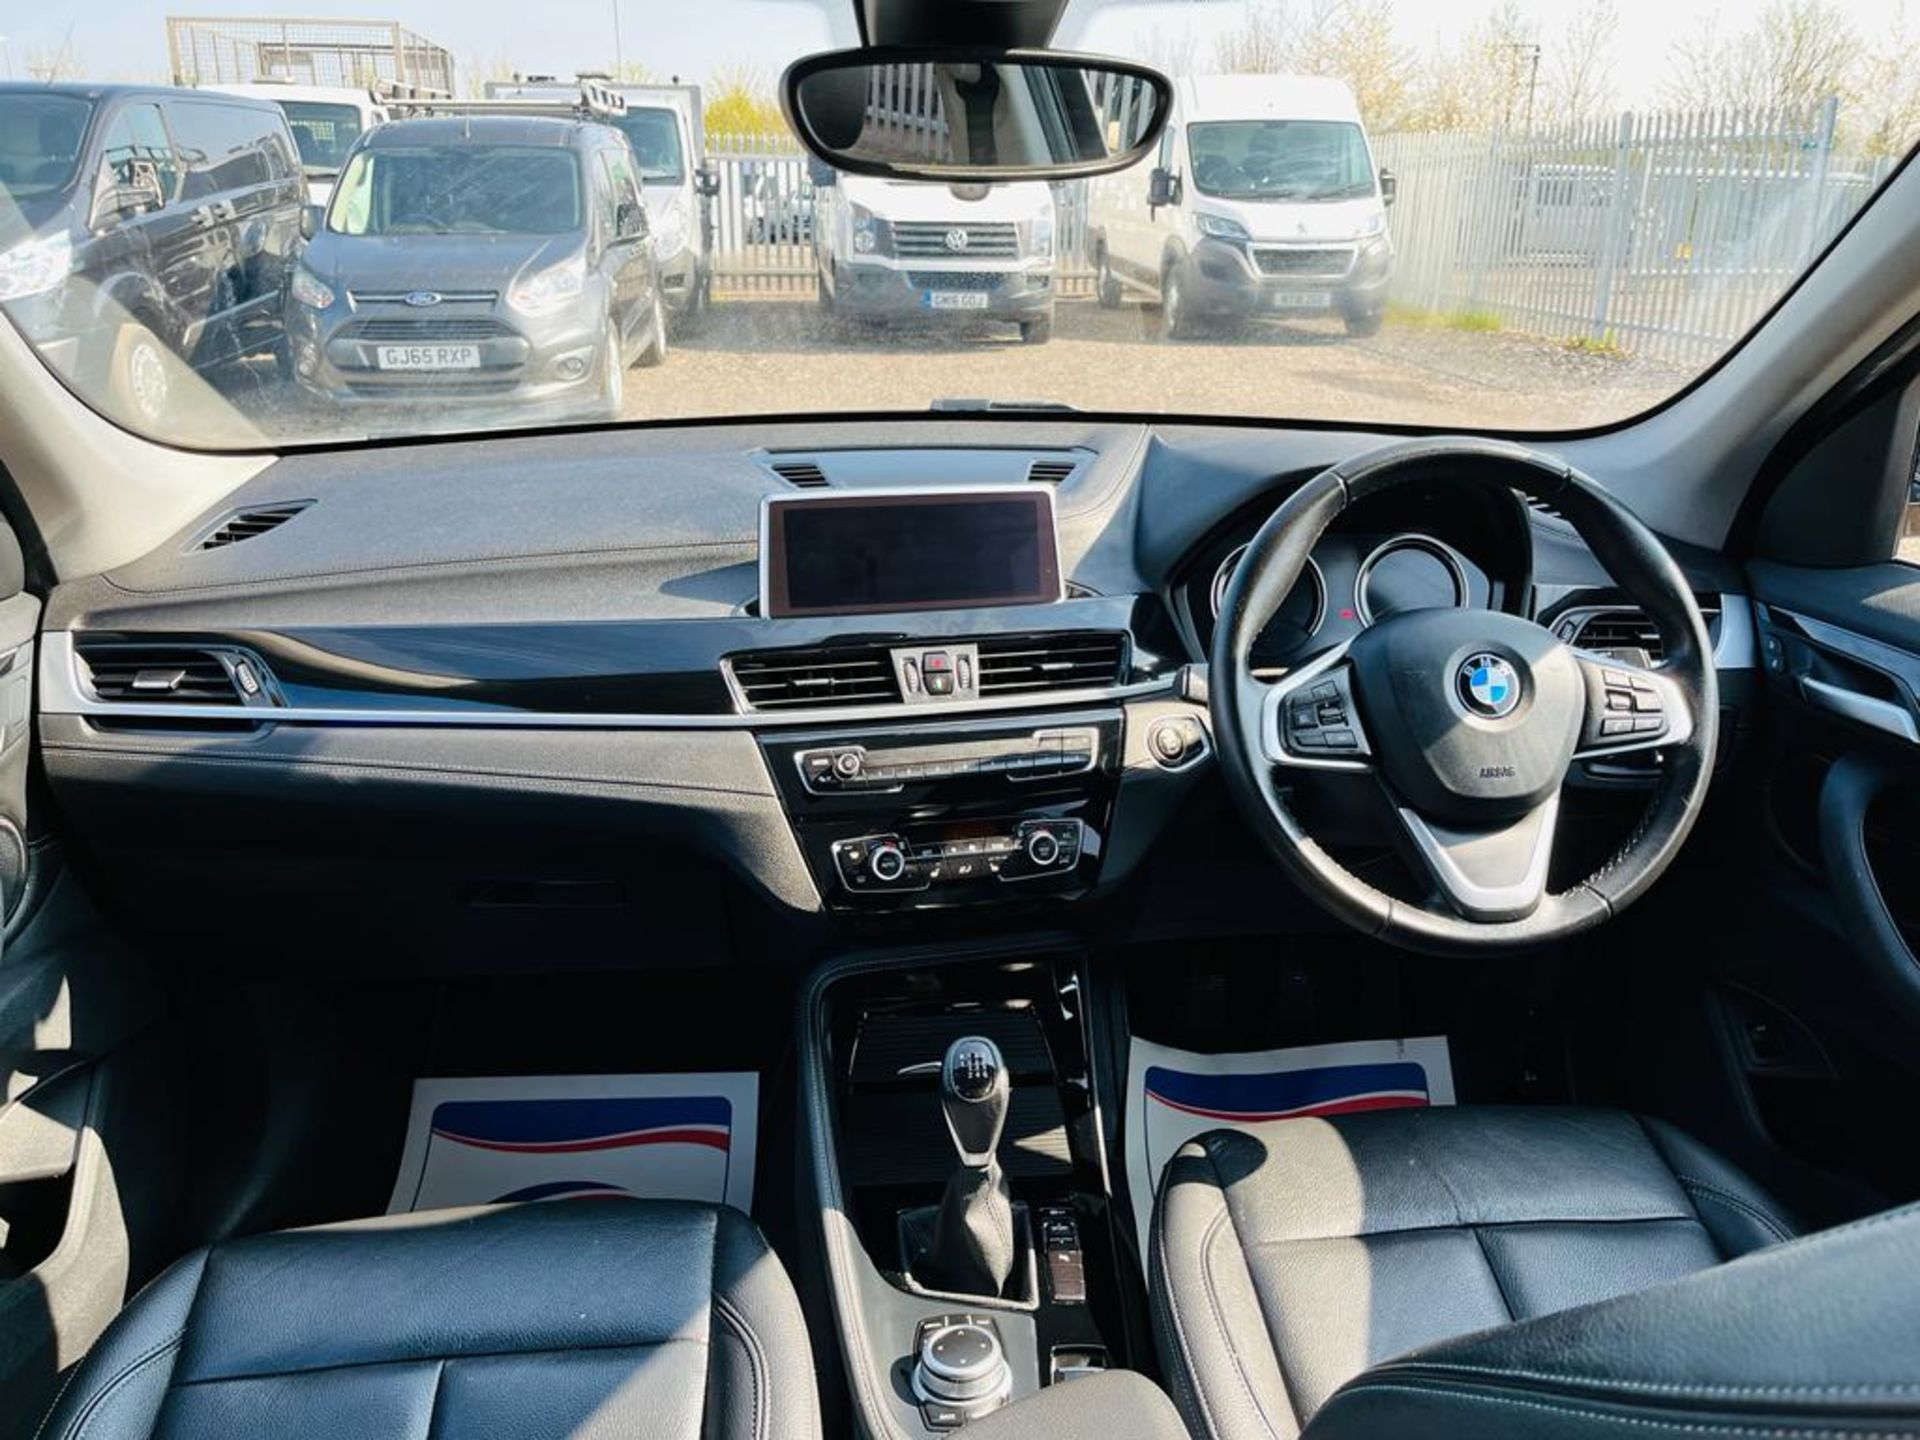 BMW X1 SDrive 1.5 18I Xline 2020 '20 Reg' Sat Nav - A/C - Parking Sensors - No Vat - Image 14 of 26